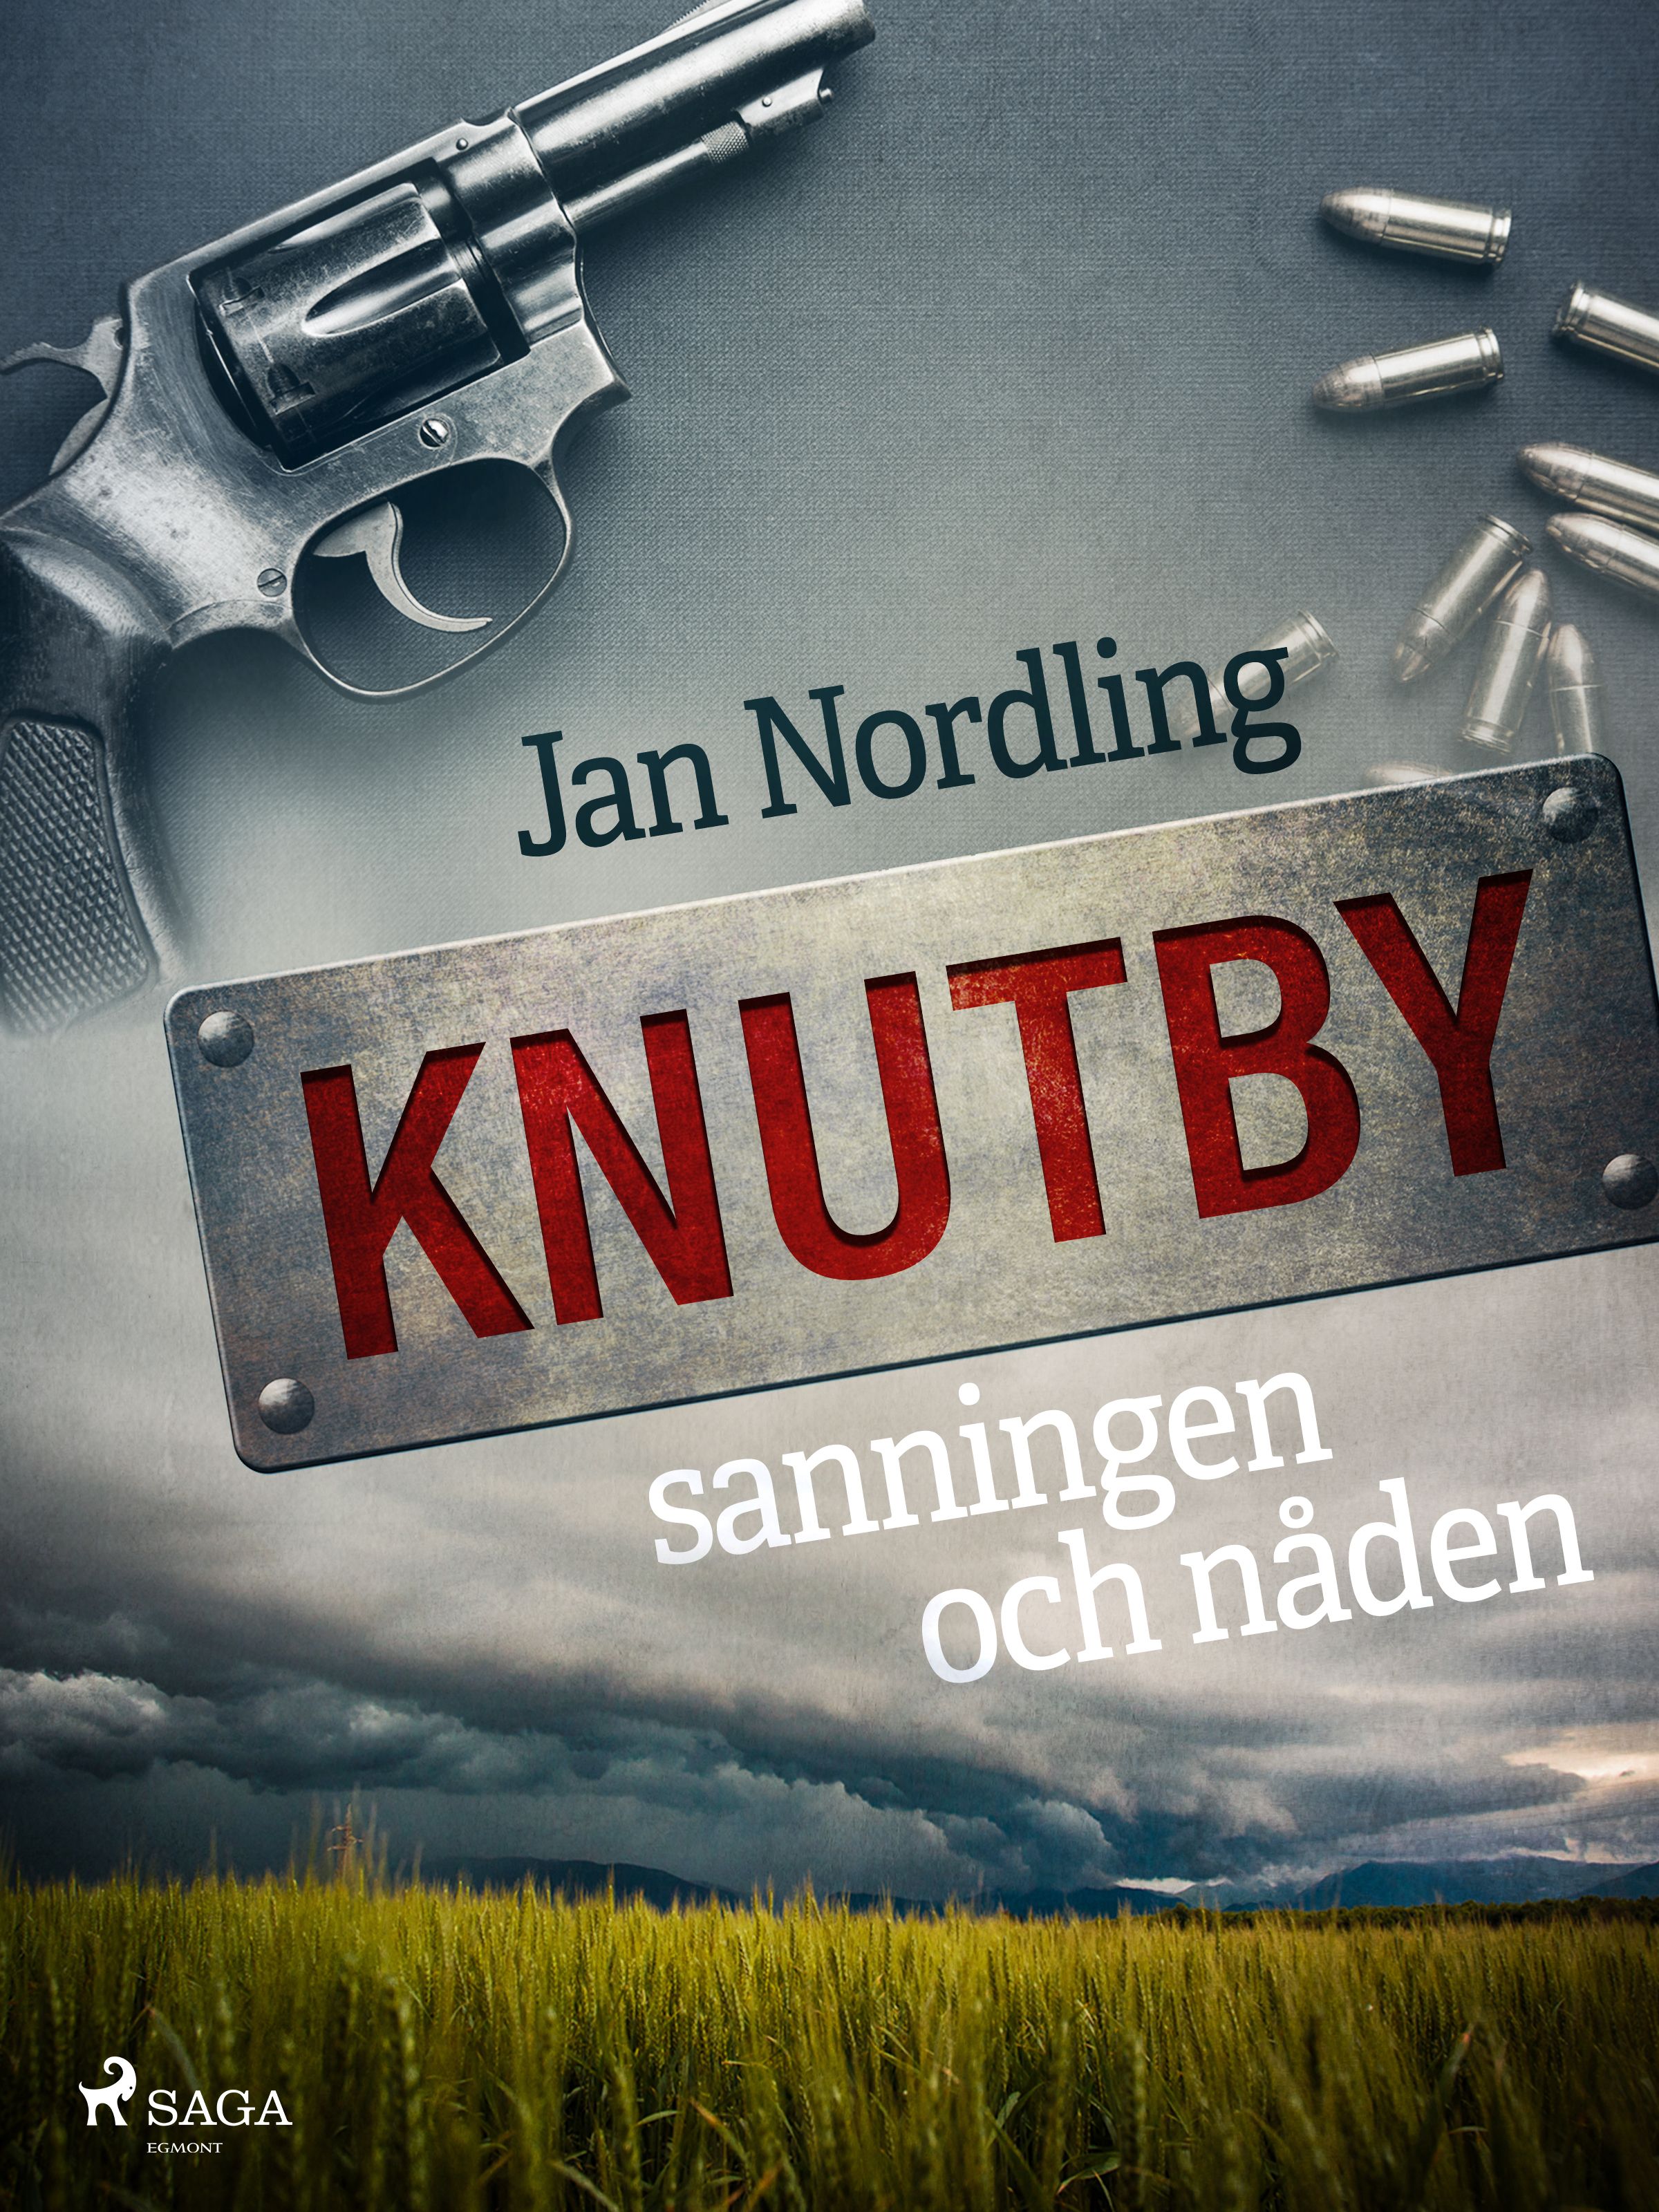 Knutby – sanningen och nåden, e-bok av Jan Nordling